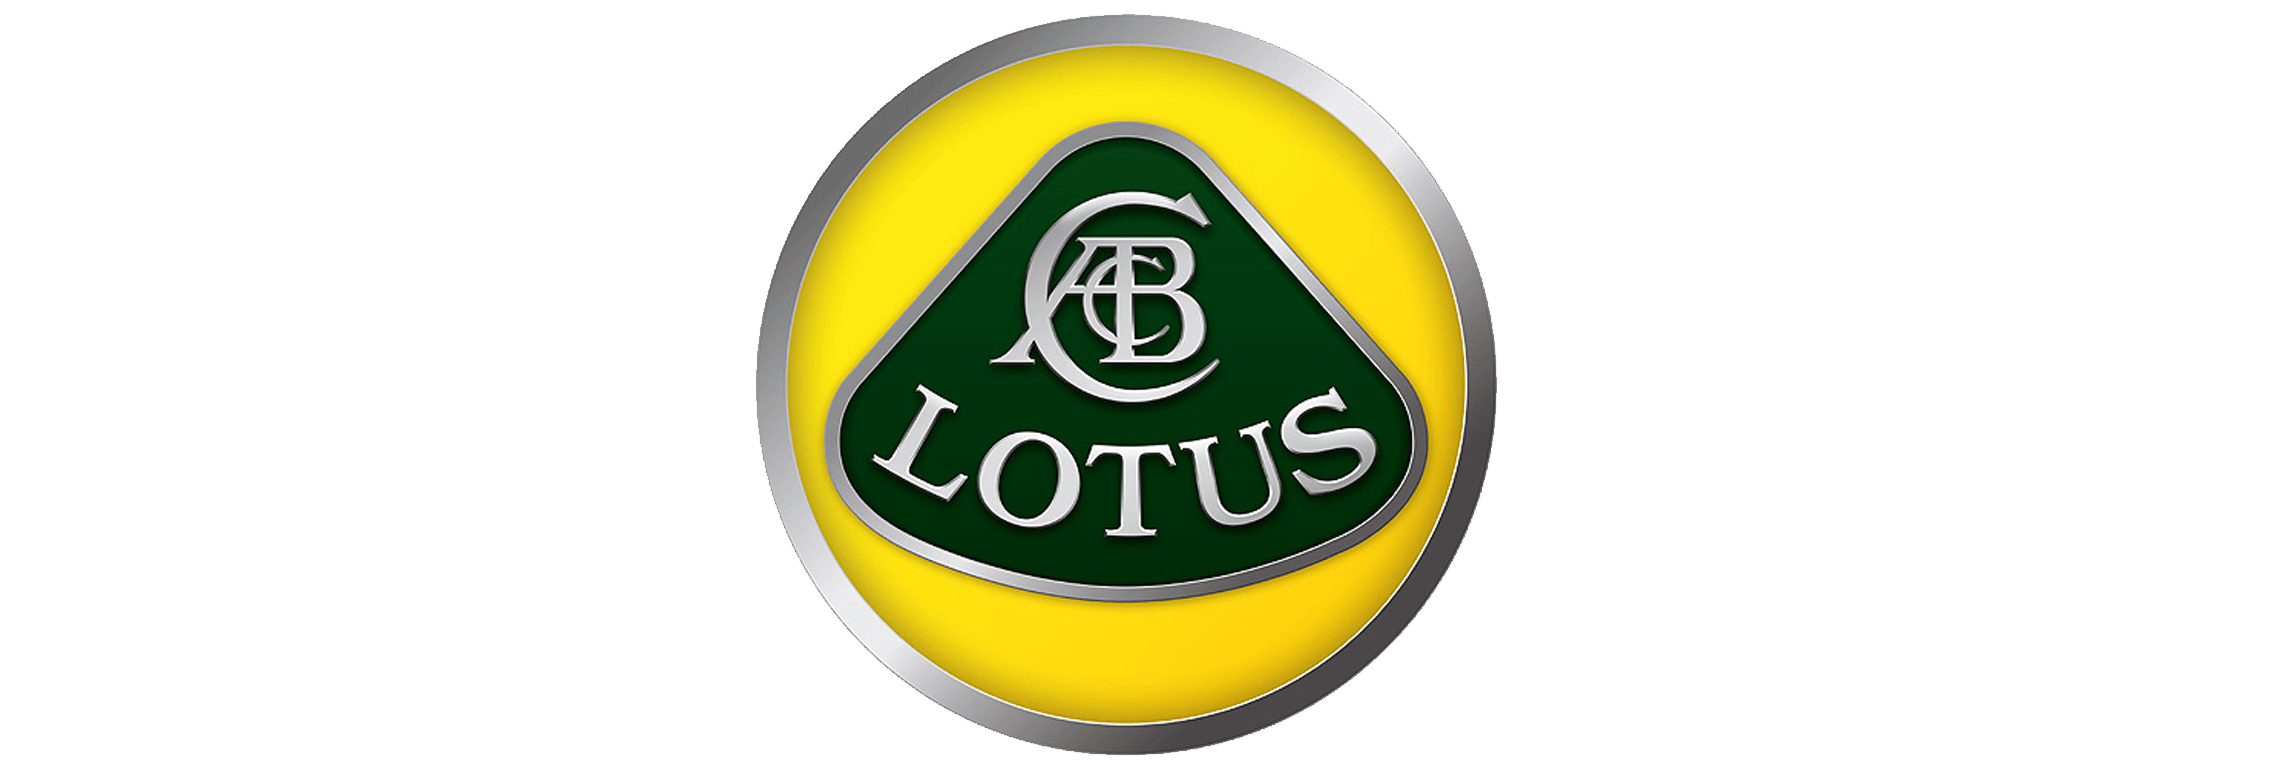 Lotus Car Logo LogoDix